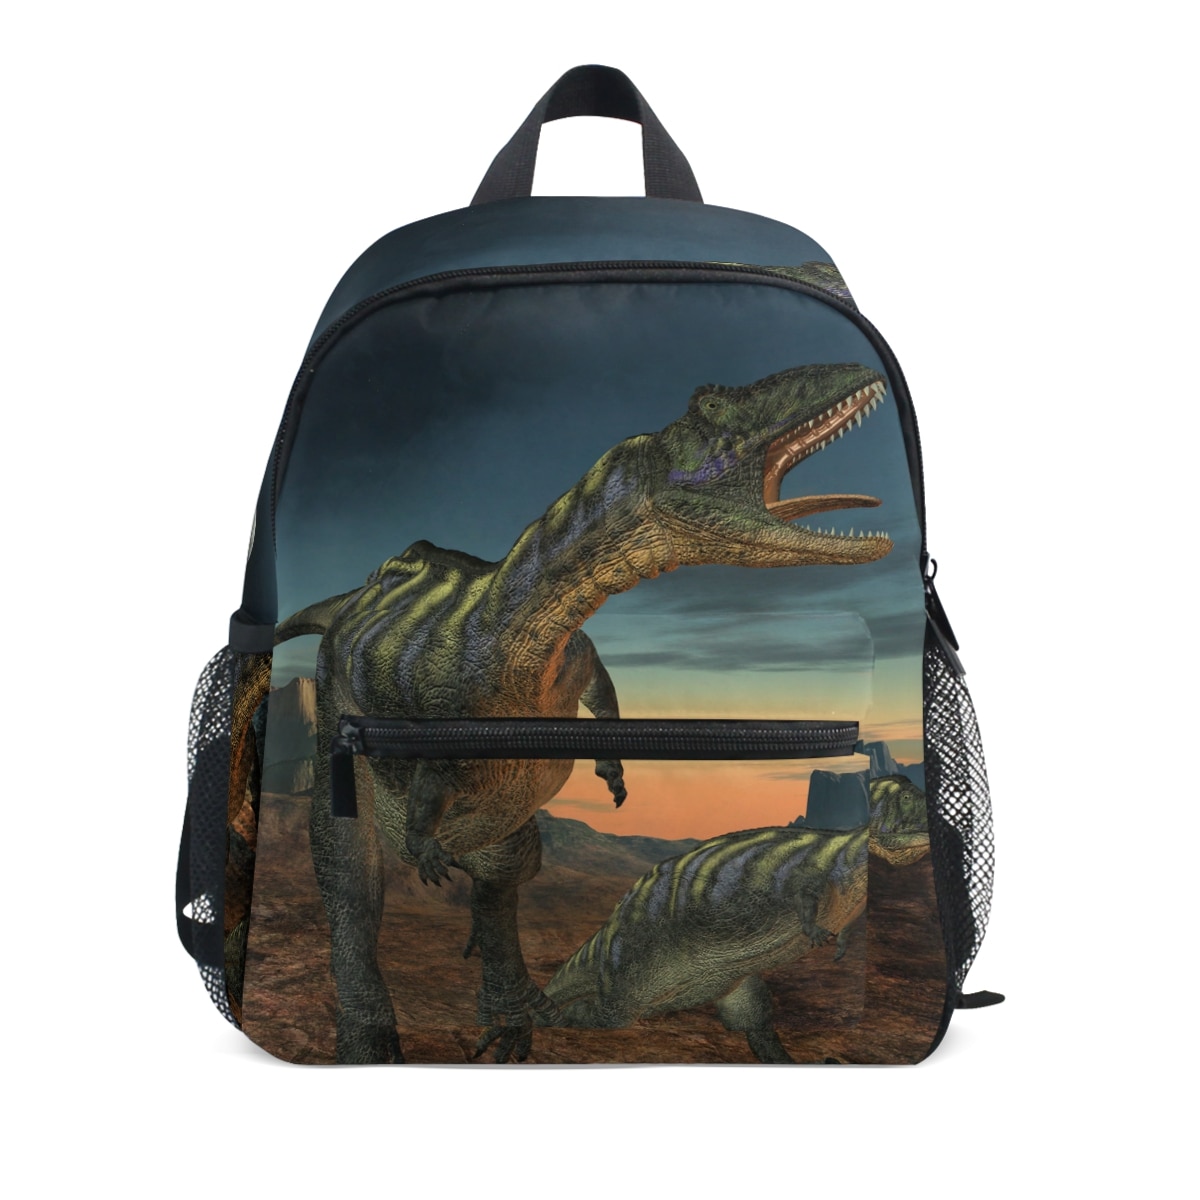 Dinosaur Children Backpack Comfortable Kids Toddler School Bags Dino ...